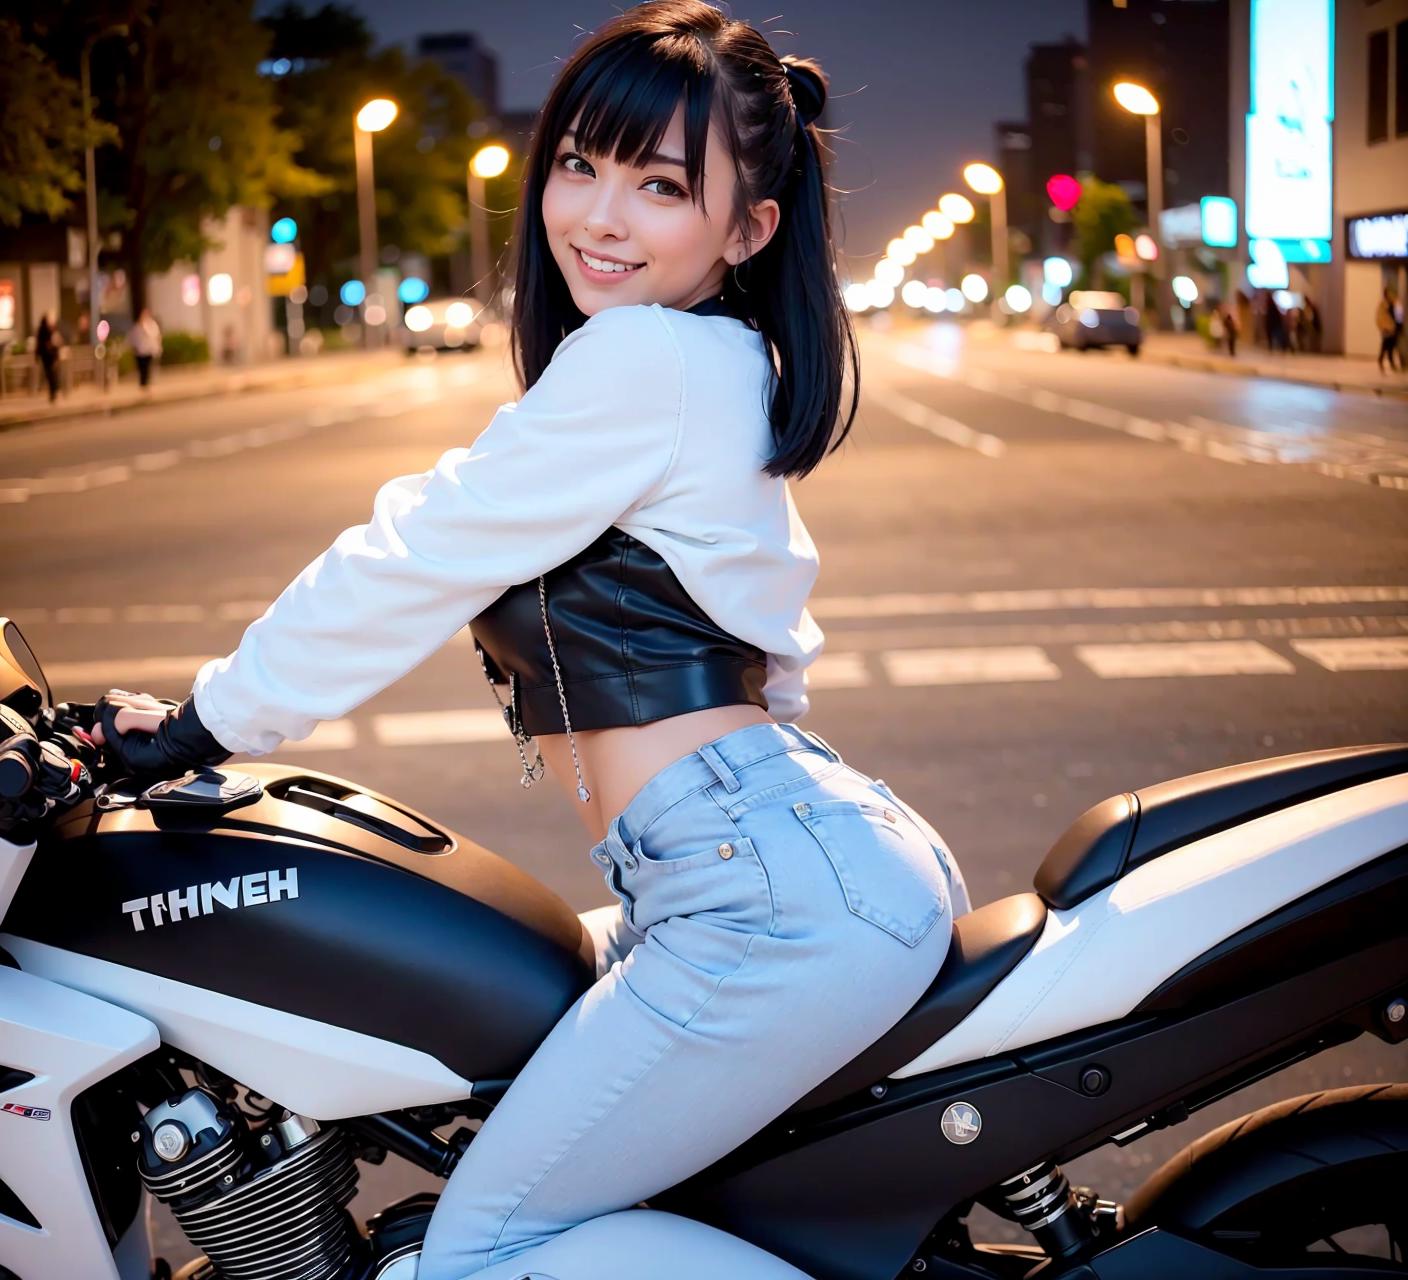 Motorbike EX | Transportation LoRA image by YeHeAI